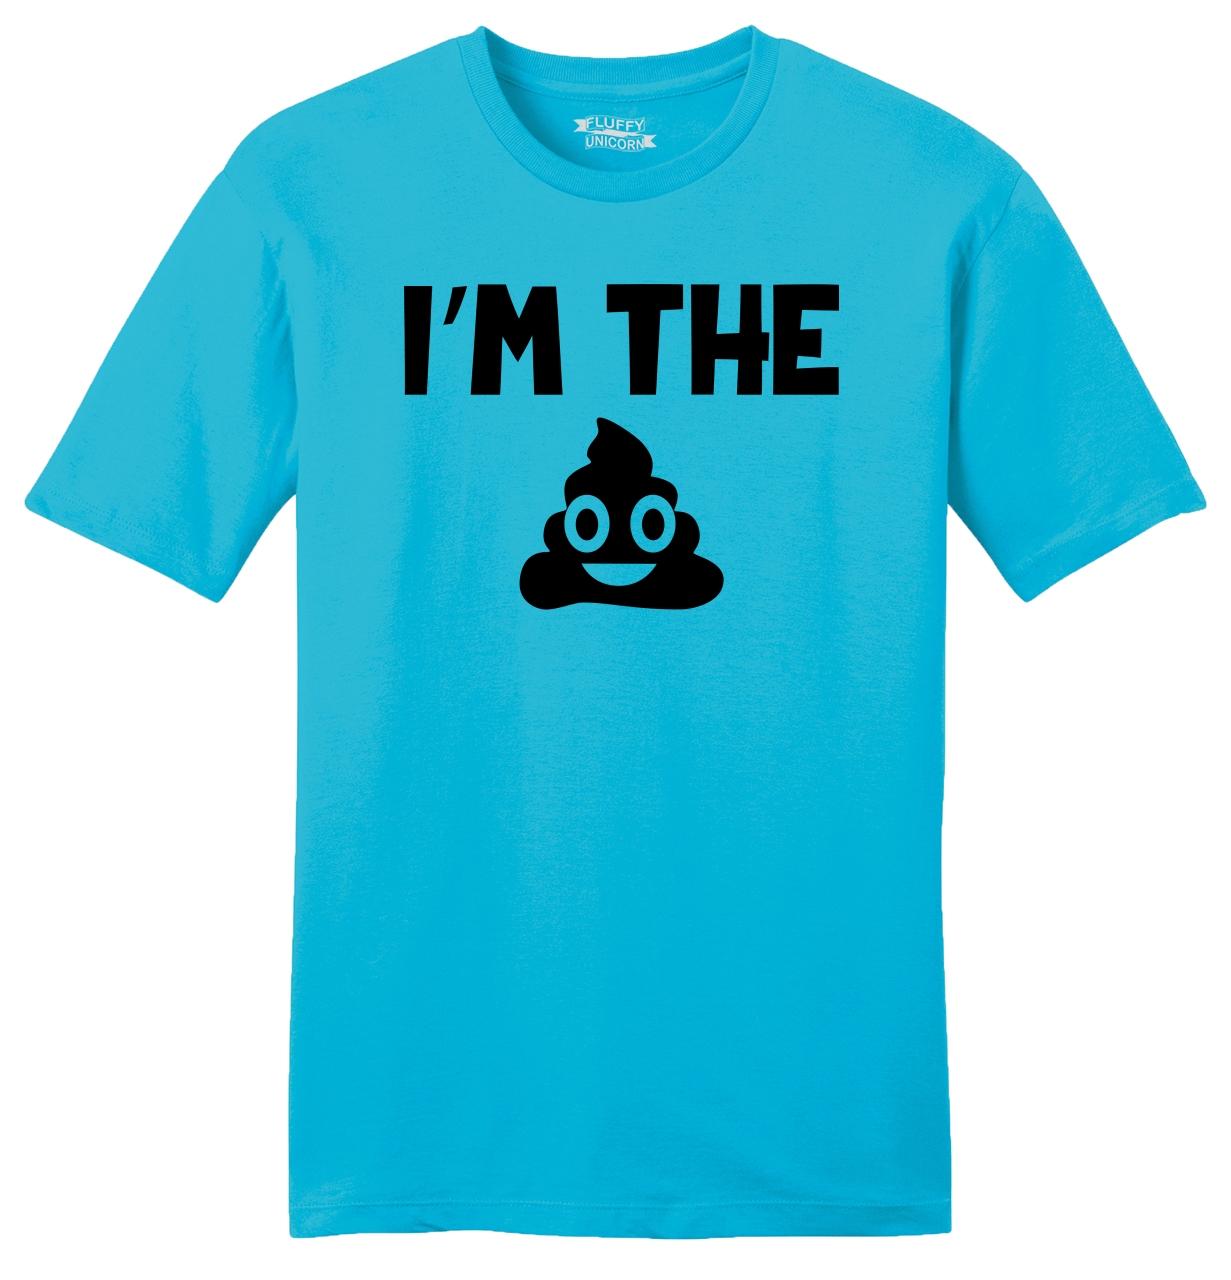 I'm The S*** Poop Funny Mens Soft T Shirt Poop Humor Im The Best ...